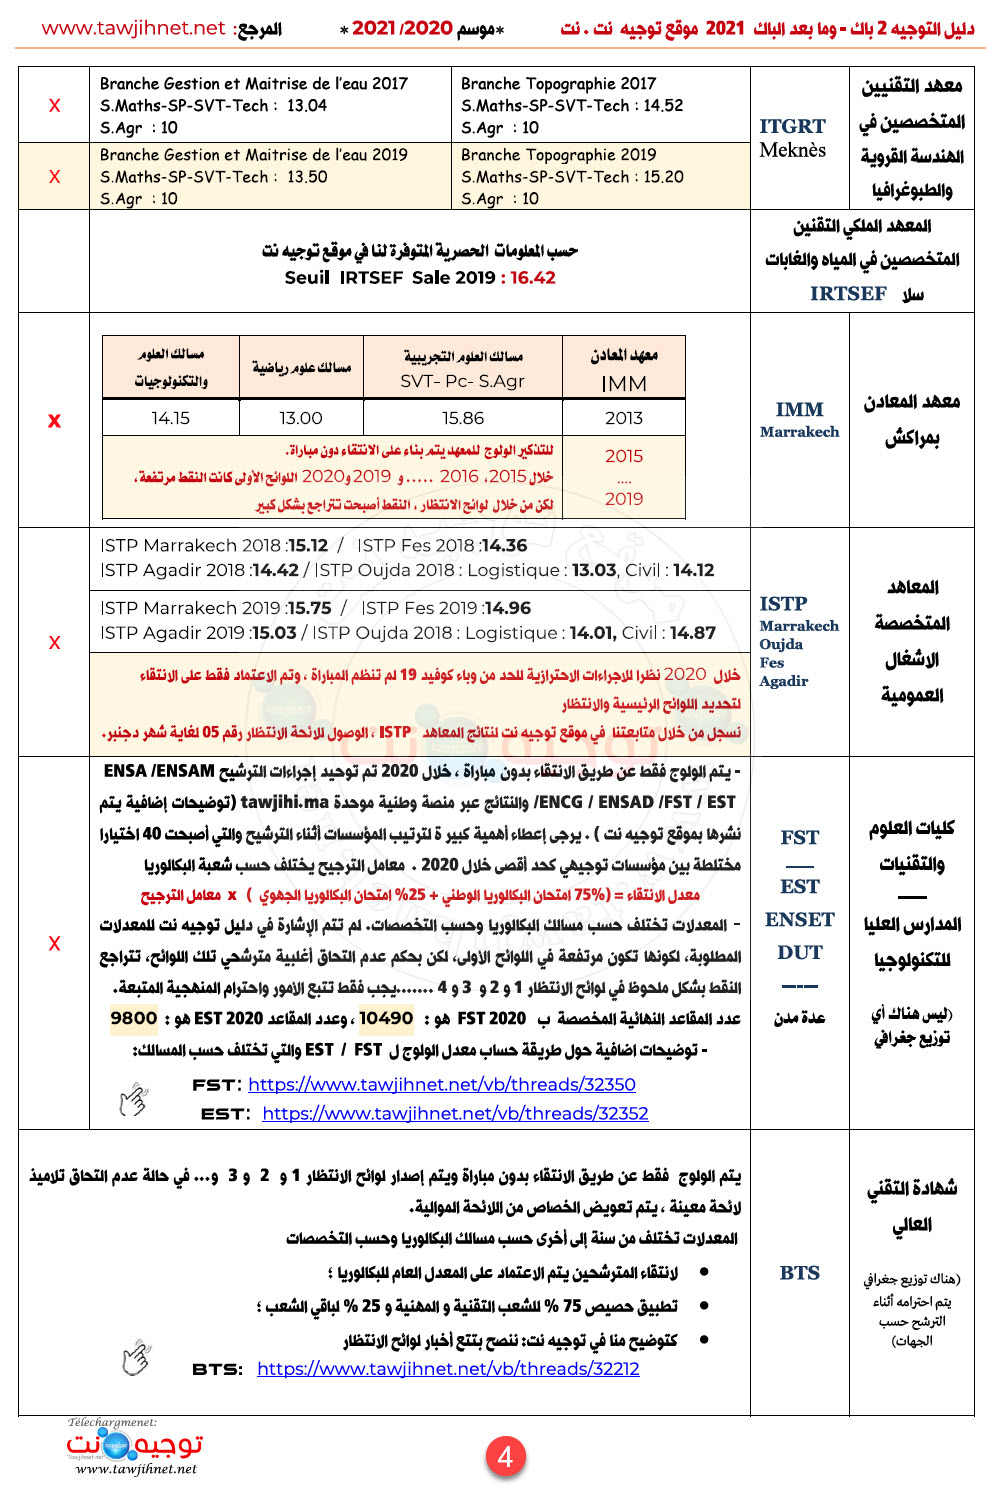 seuils-preselection-ecoles-instituts-maroc-2021_Page_4.jpg